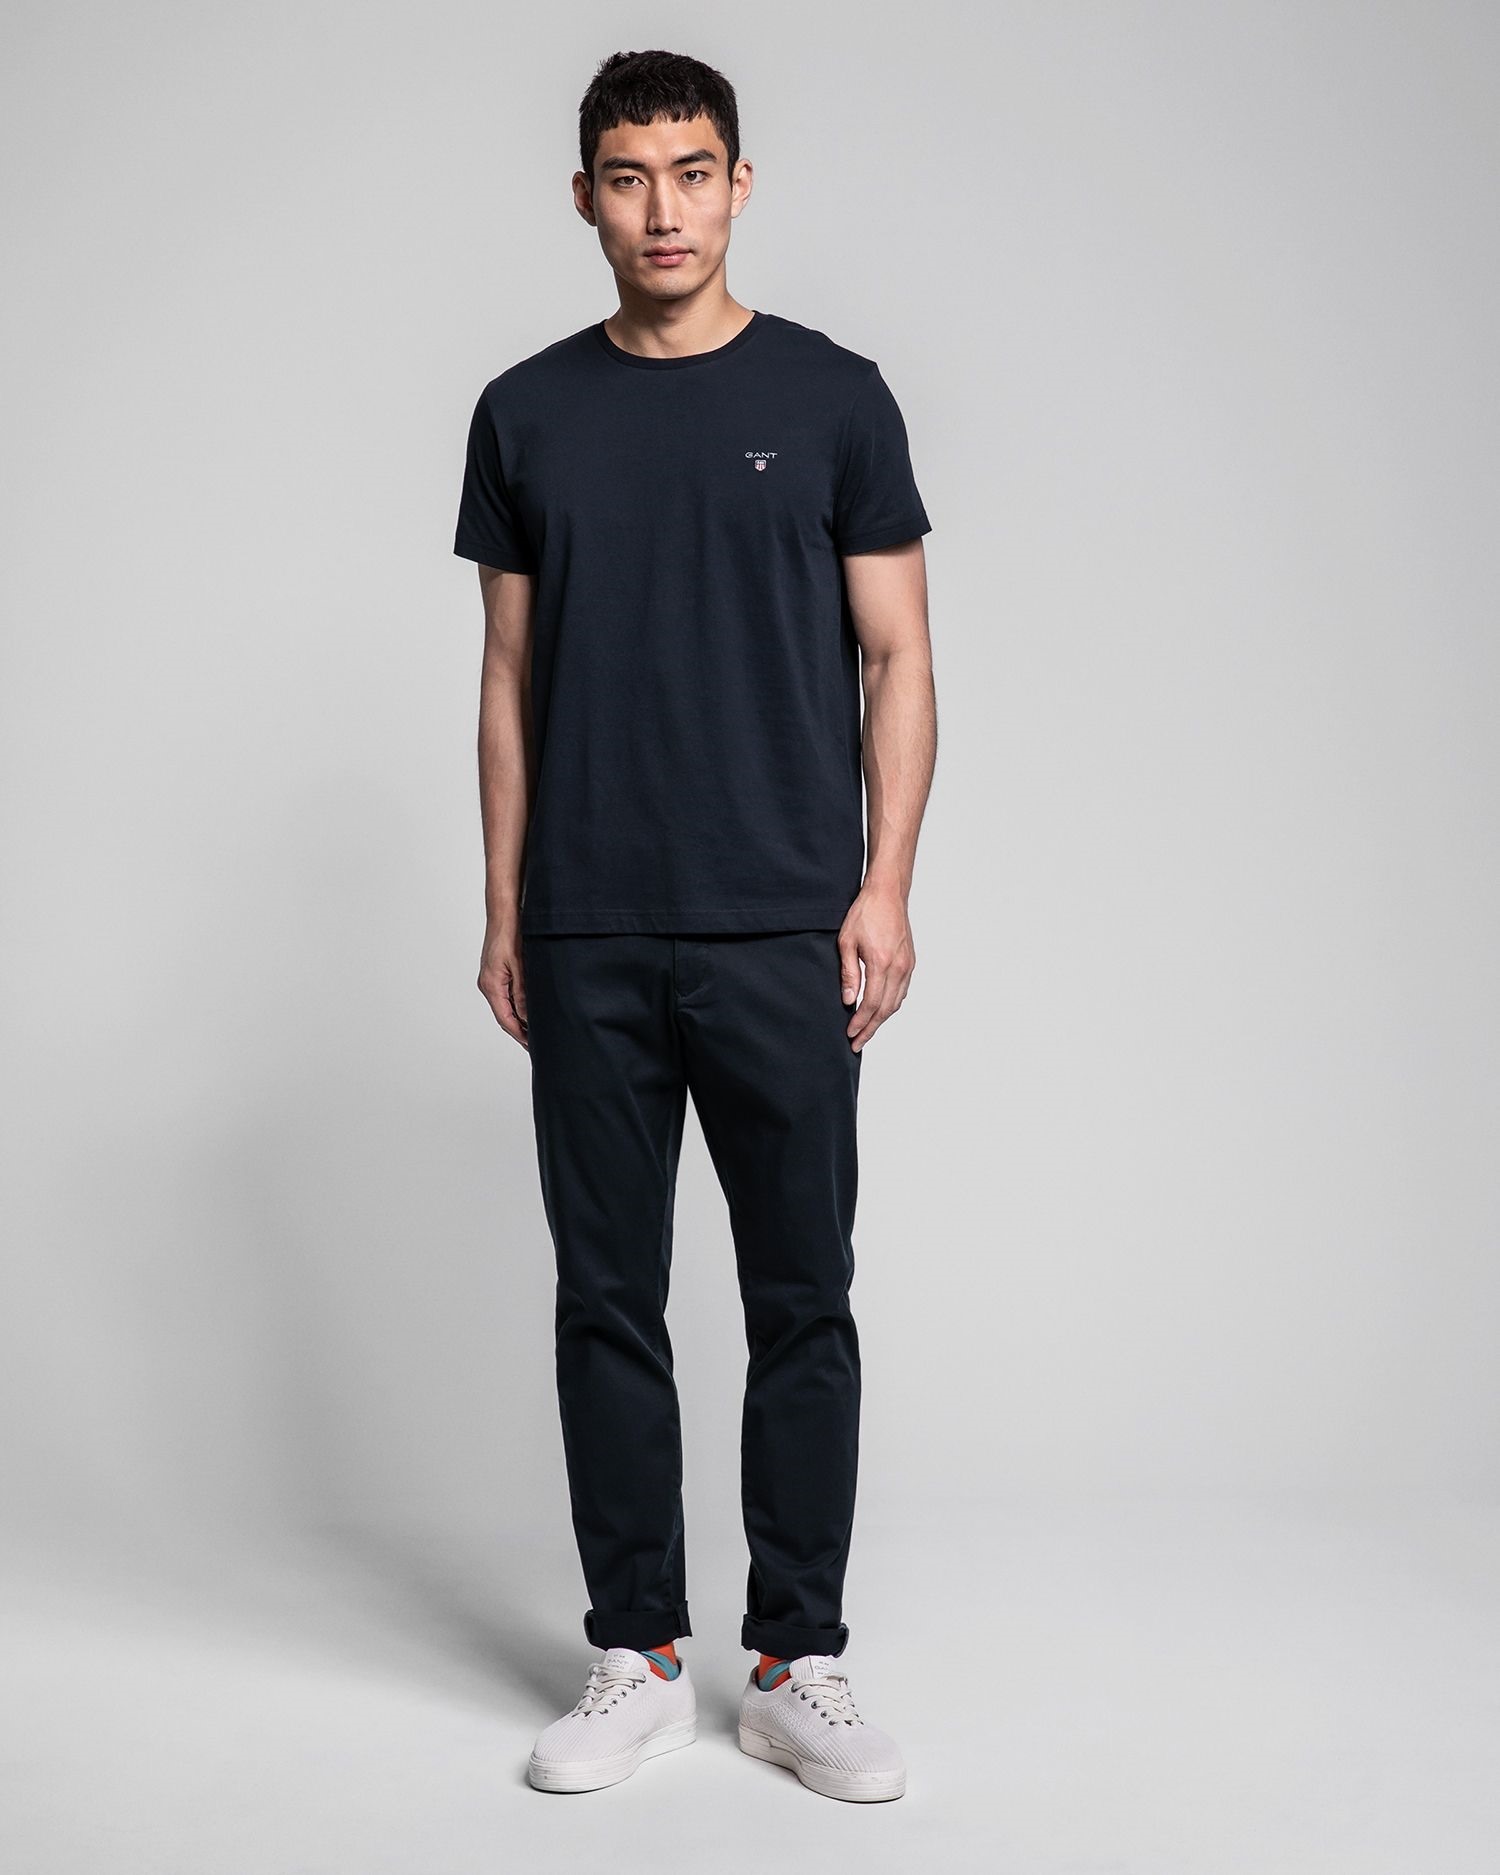 Gant Men's Original T-Shirt Black | Port Phillip Shop